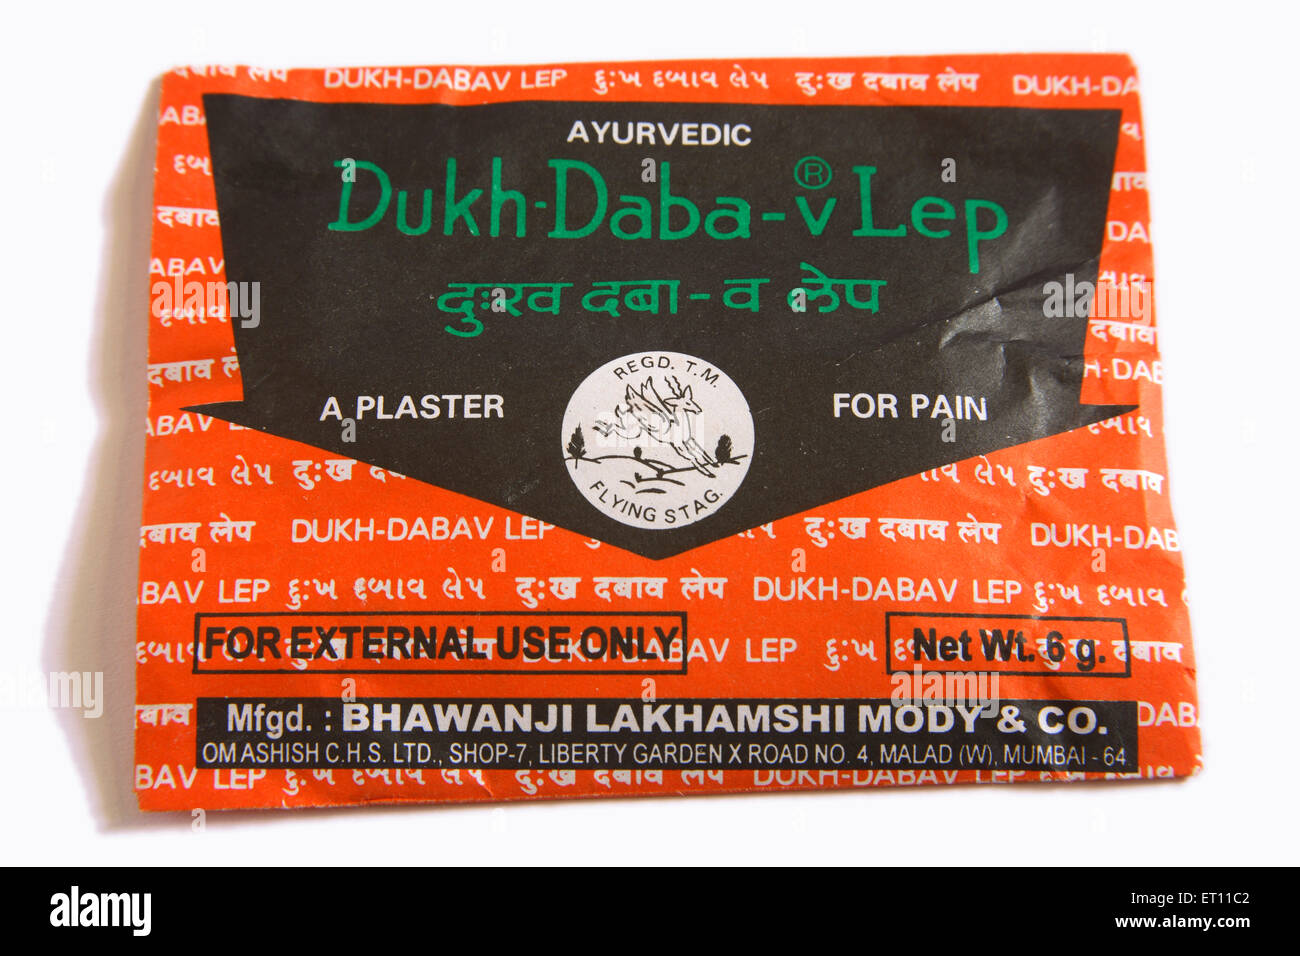 Ayurvedic medicine dukh daba v lap plaster for pain in packet on white background Stock Photo